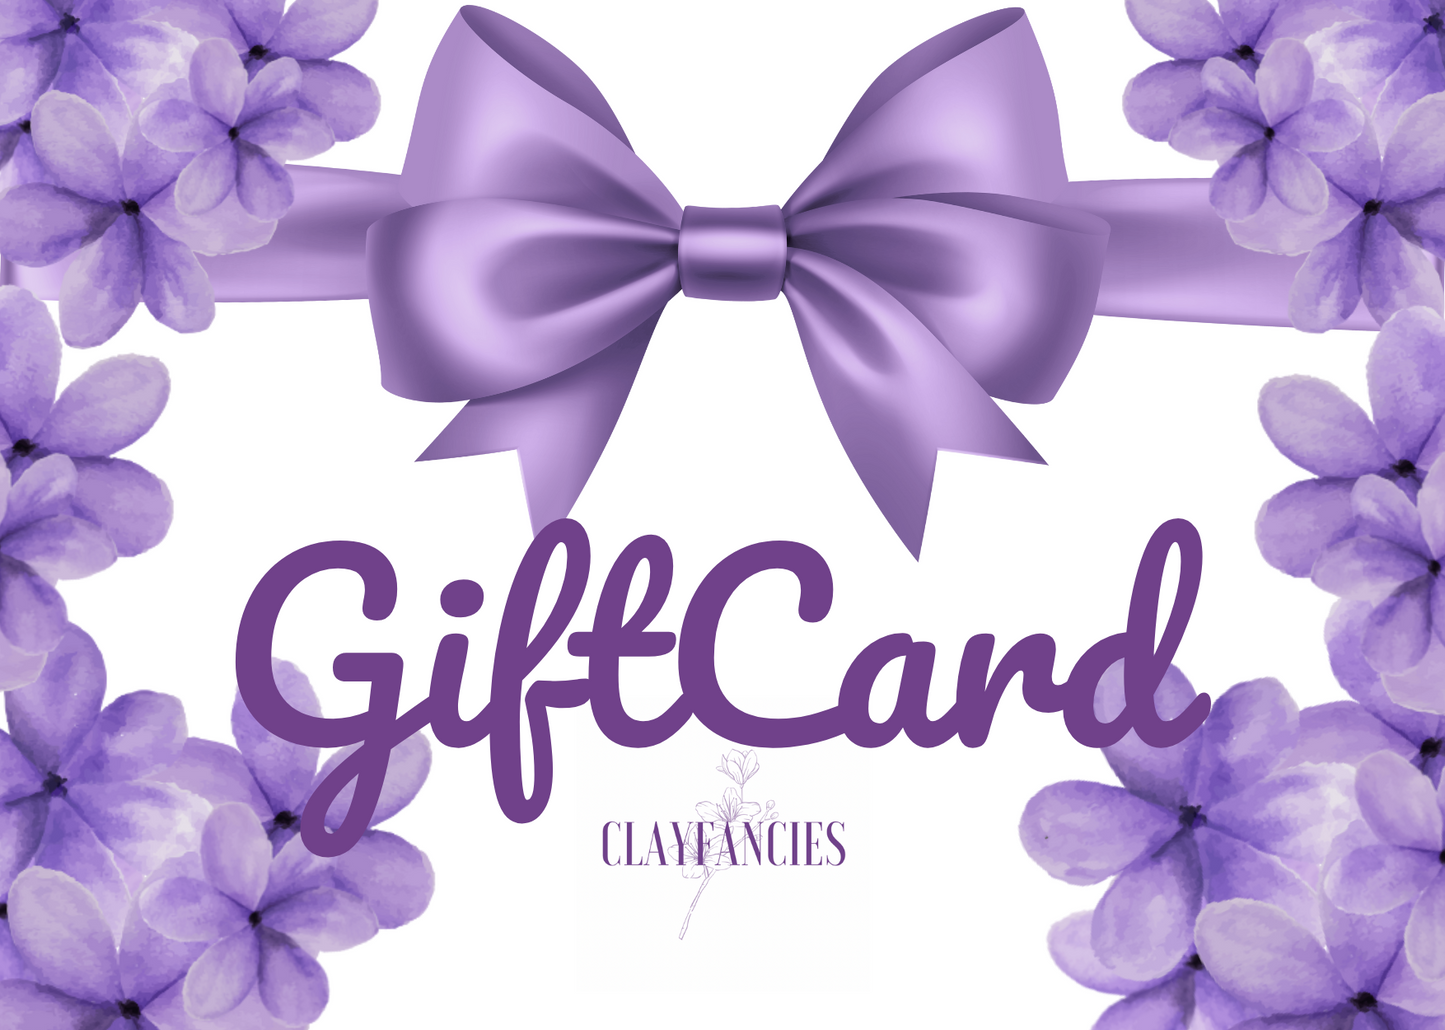 Clayfancies Gift Card